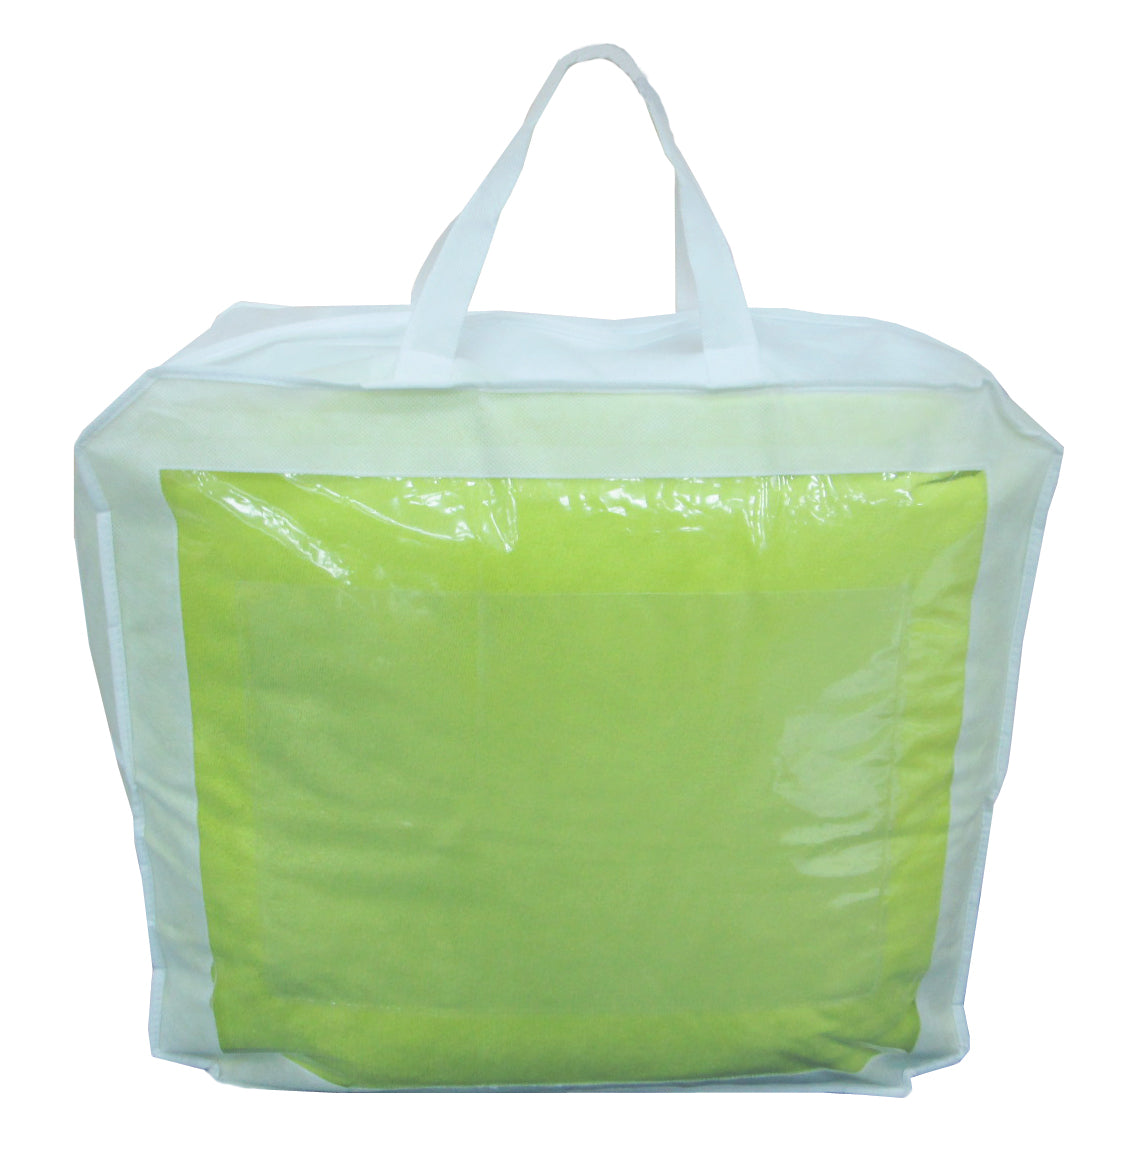 JLSB-0064 Sewn Bag